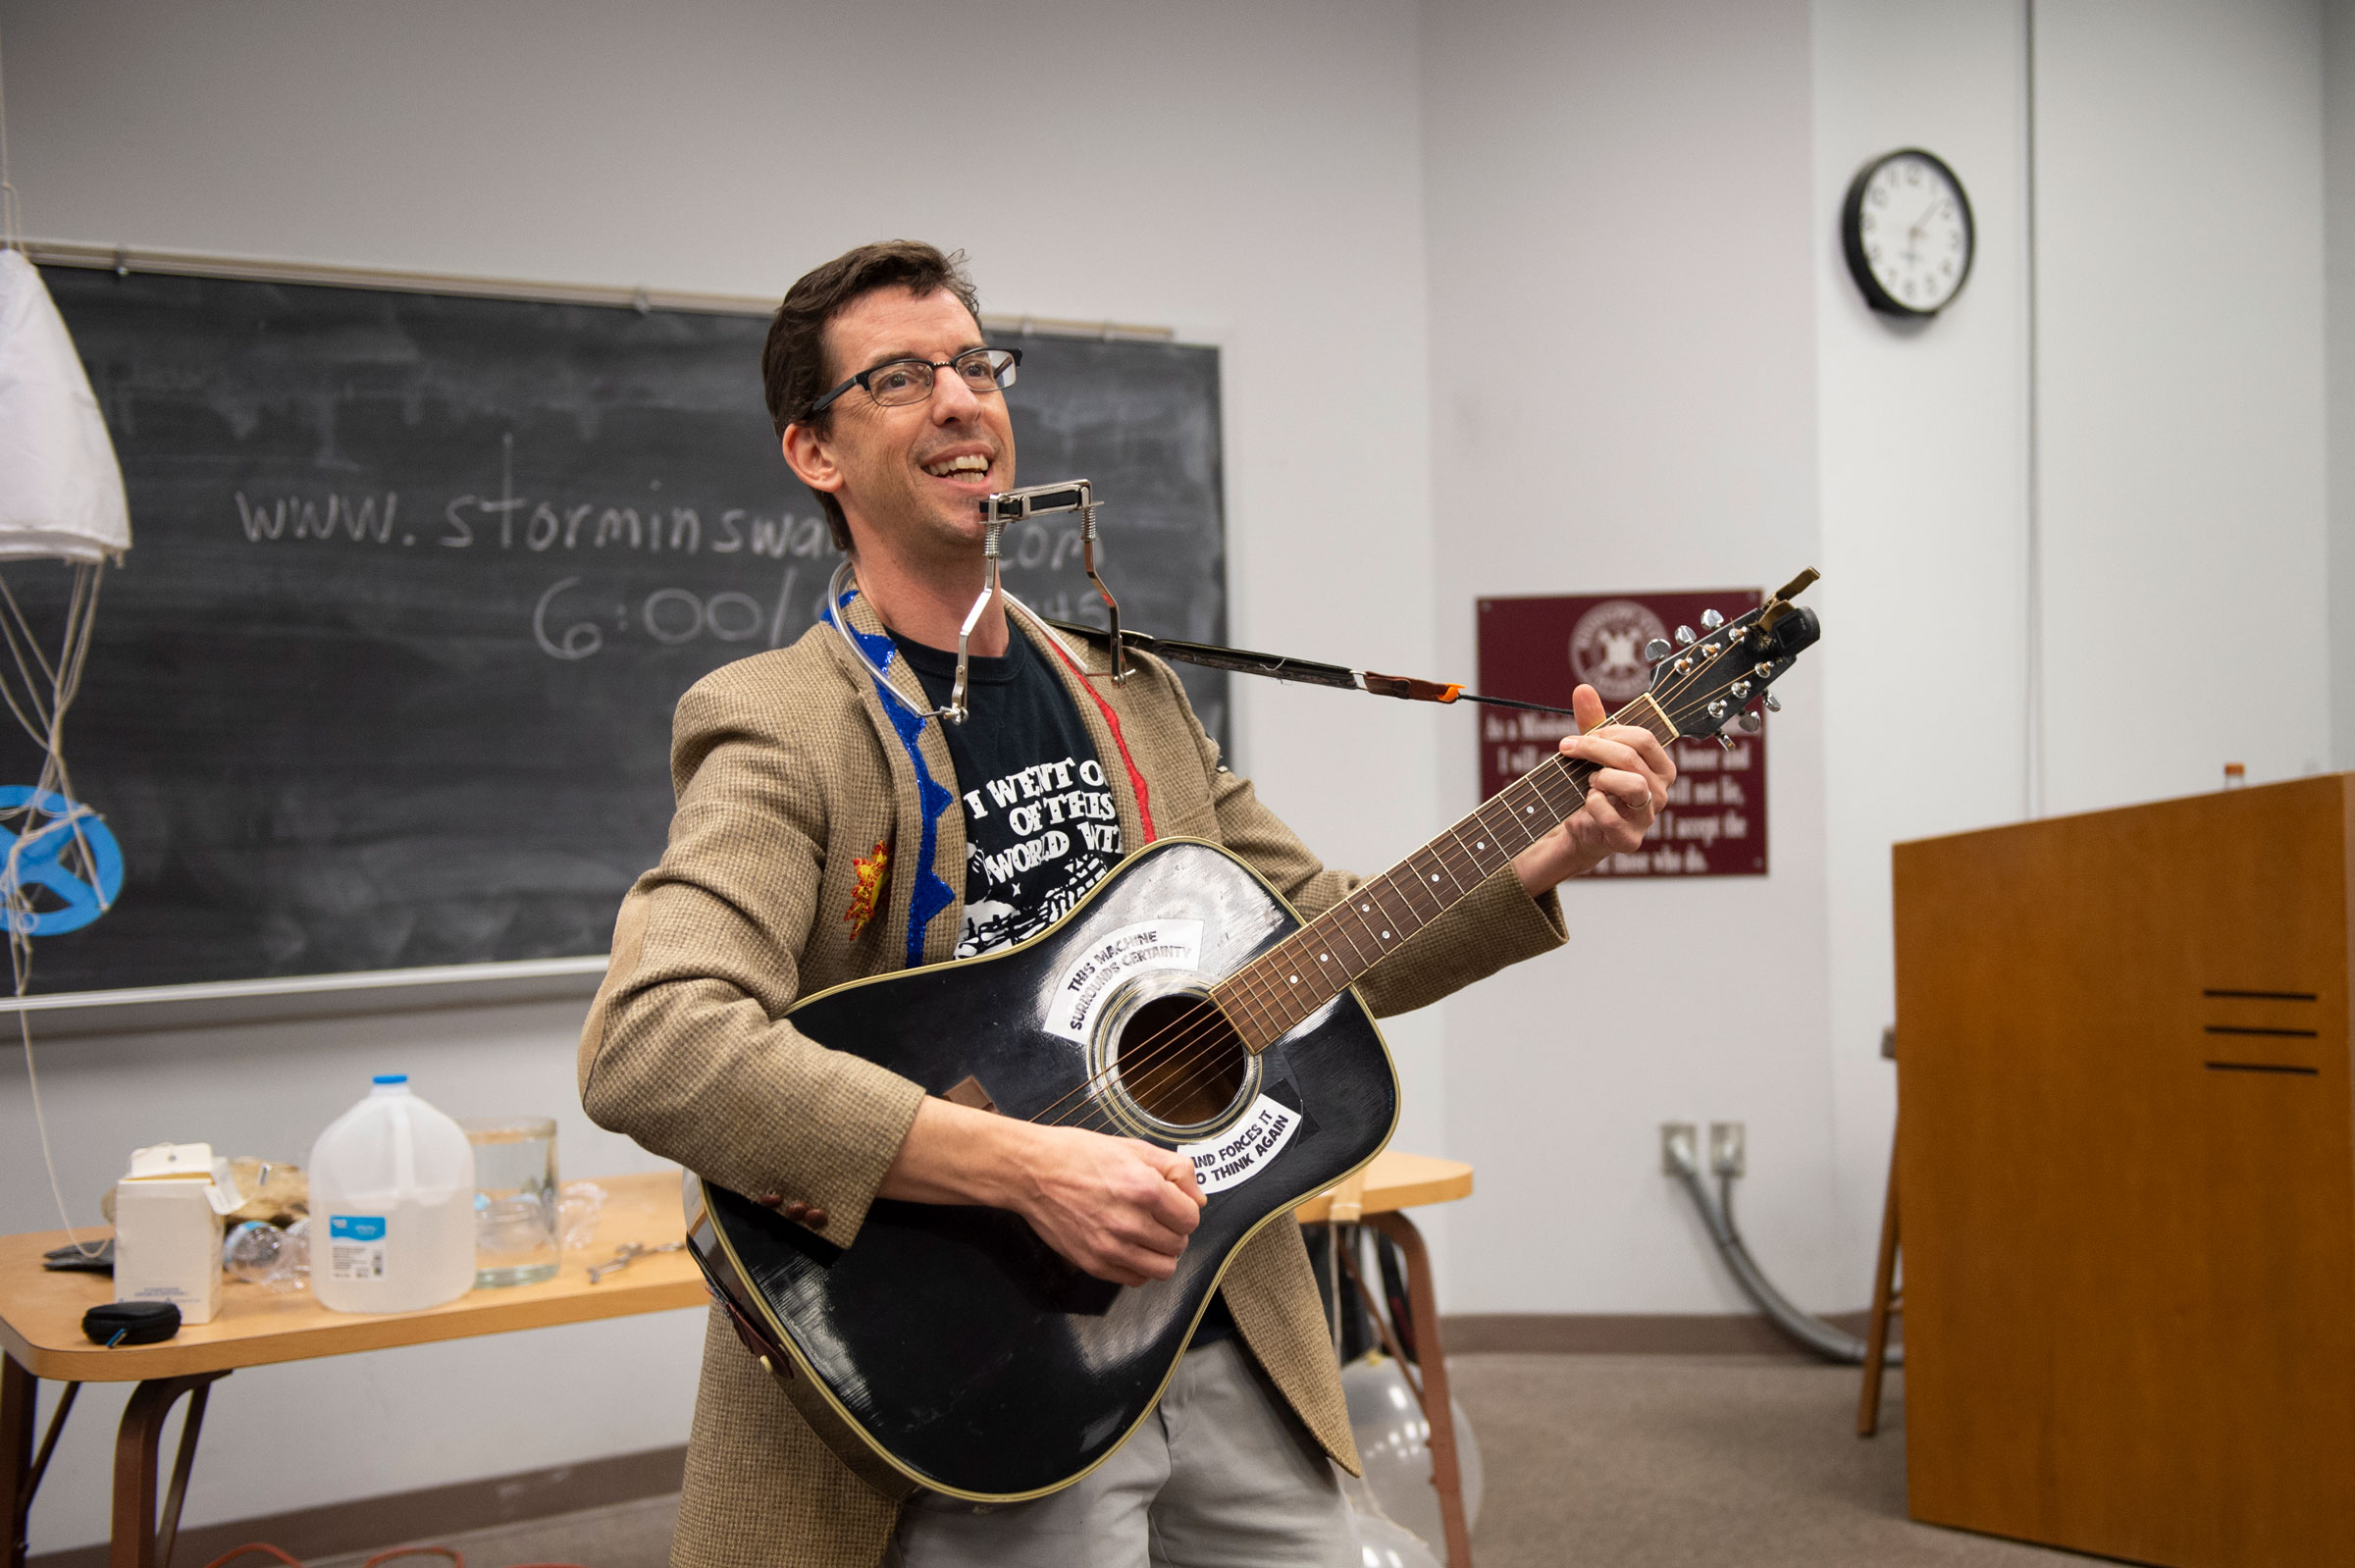 Bob Swanson sings in a classroom at MSU